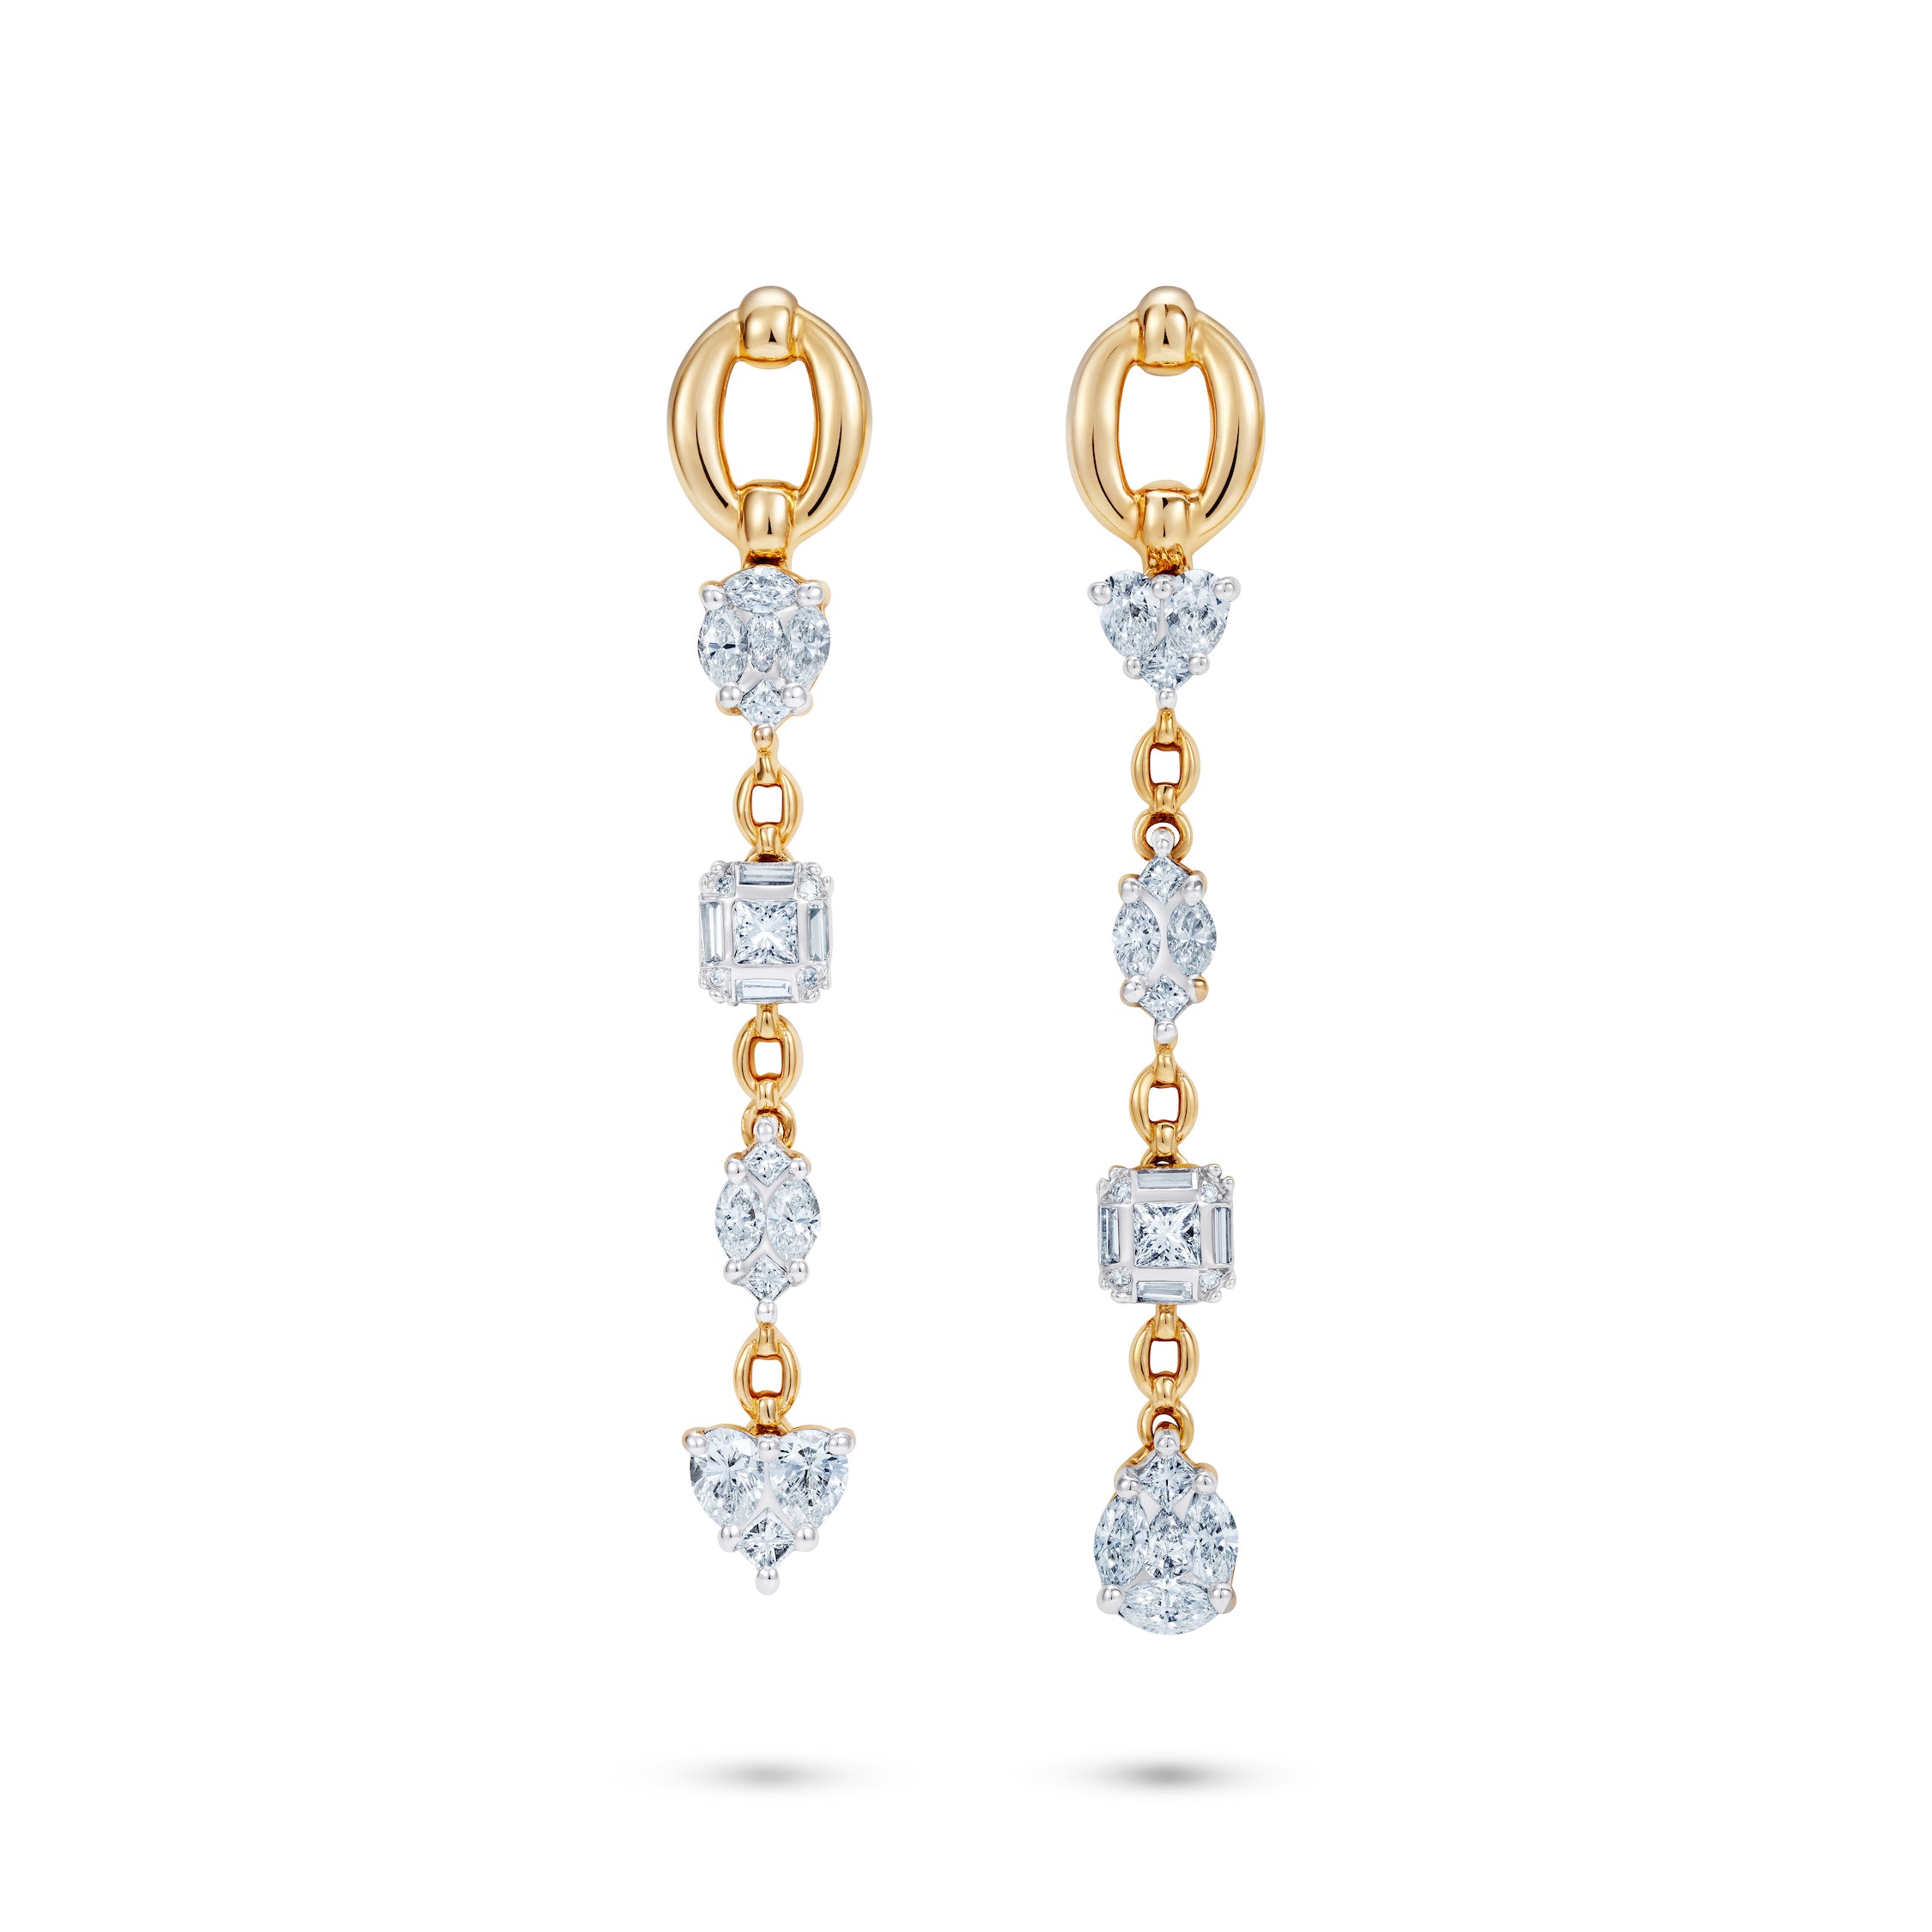 Roderica Long earrings in GOLD-WHITE-CZ | Vivienne Westwood®